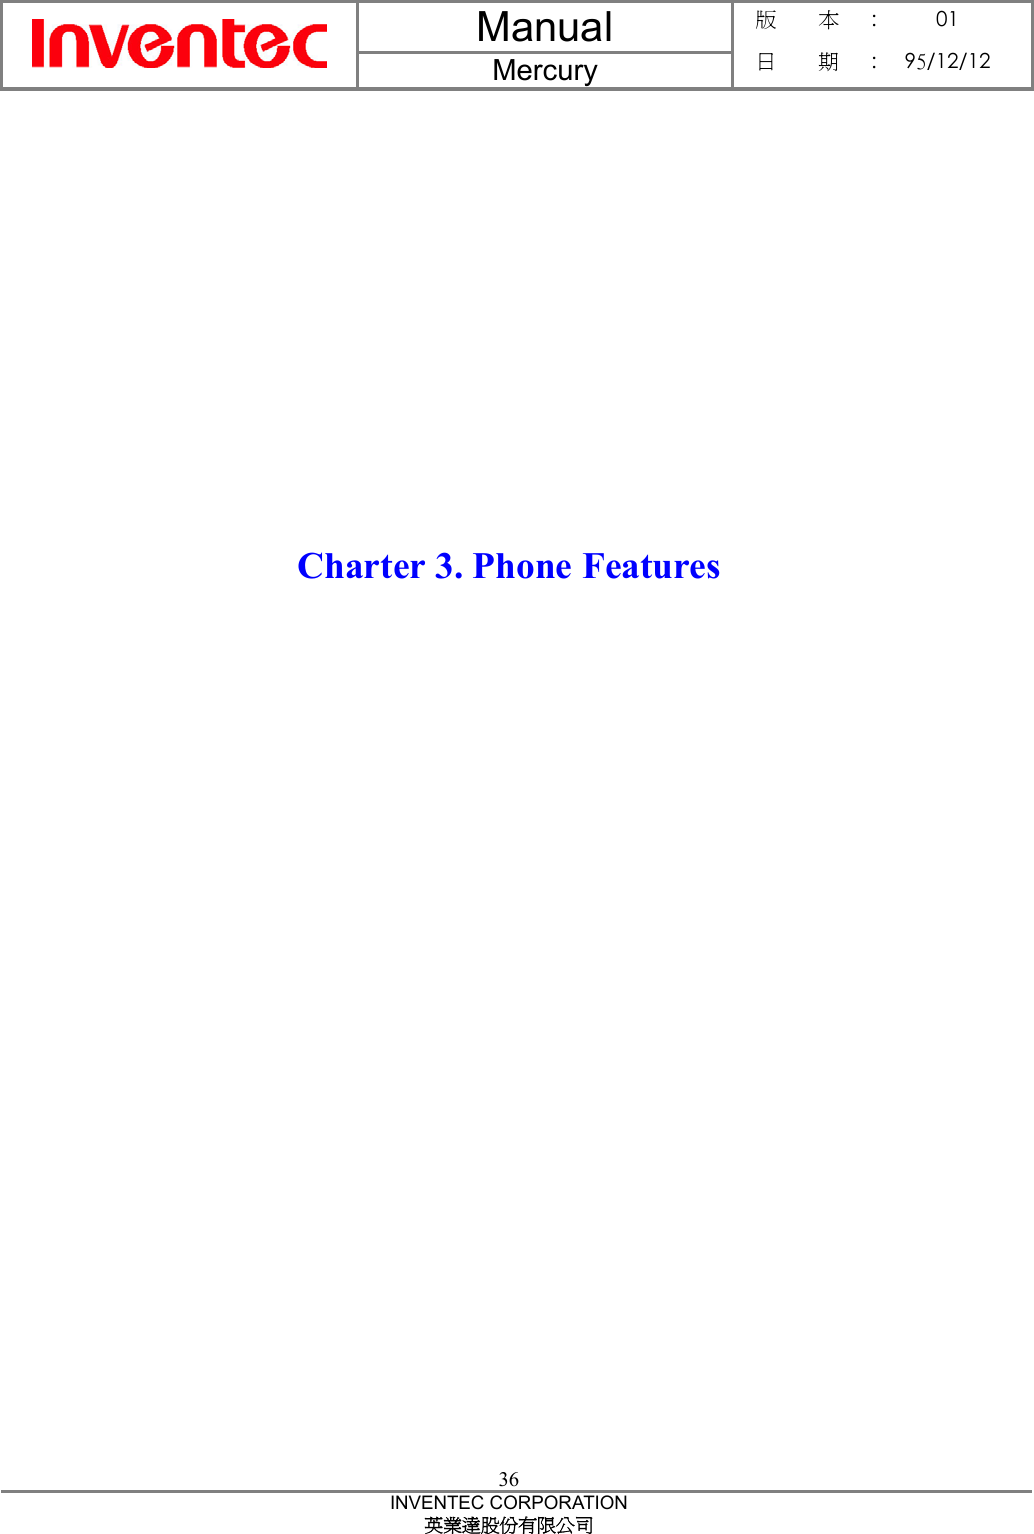 Manual  Mercury 版    本 :  01 日    期 : 95/12/12  36 INVENTEC CORPORATION 英業達股份有限公司             Charter 3. Phone Features 